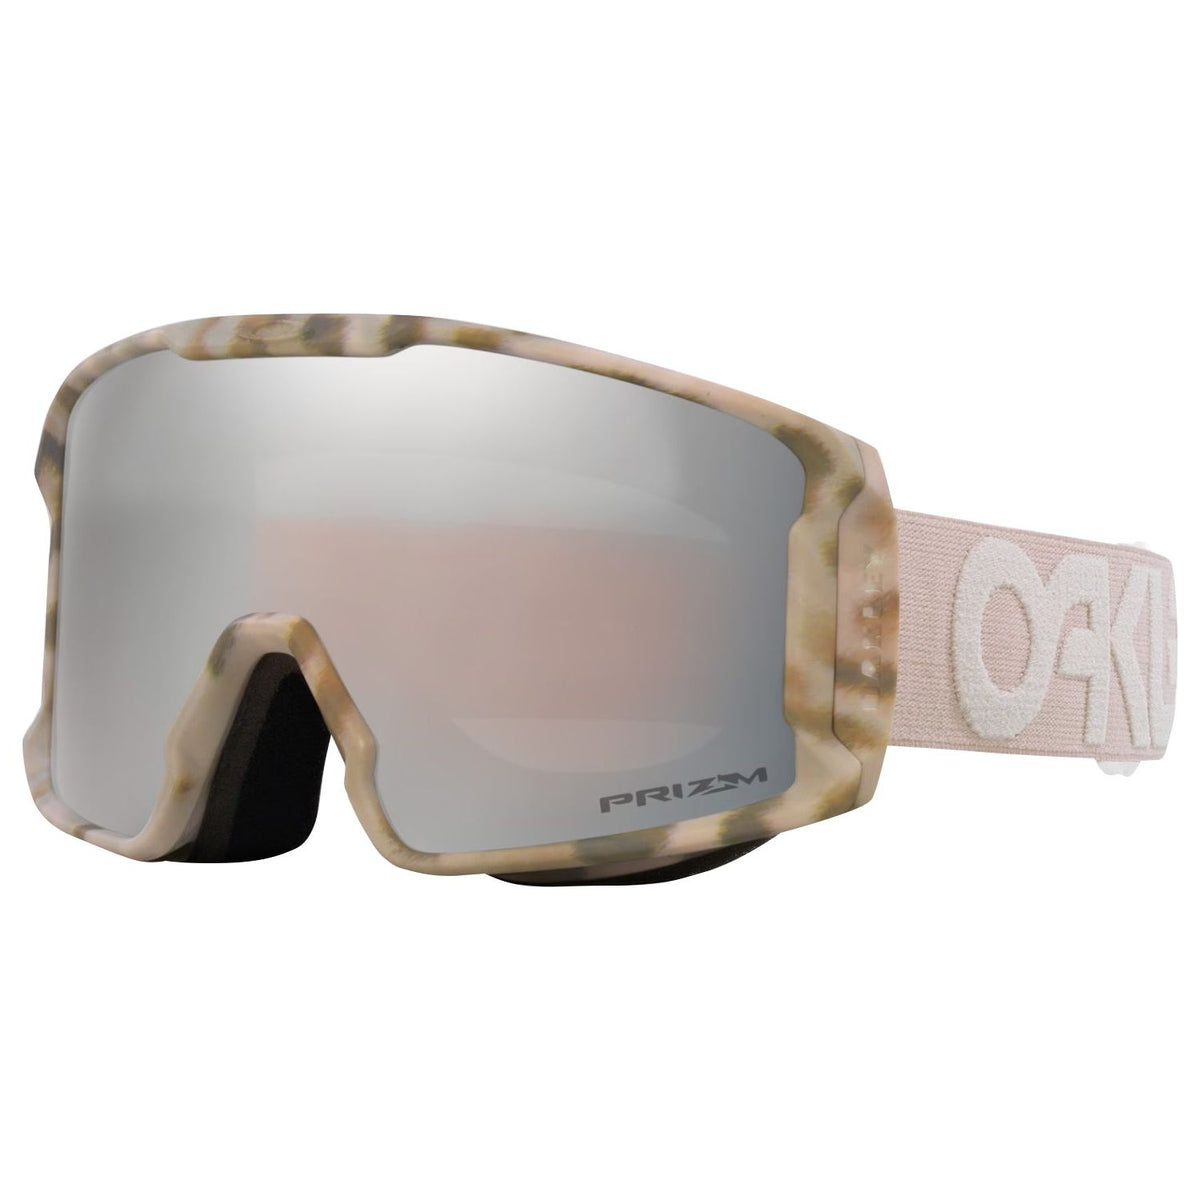 Oakley Line Miner M Snow Goggles